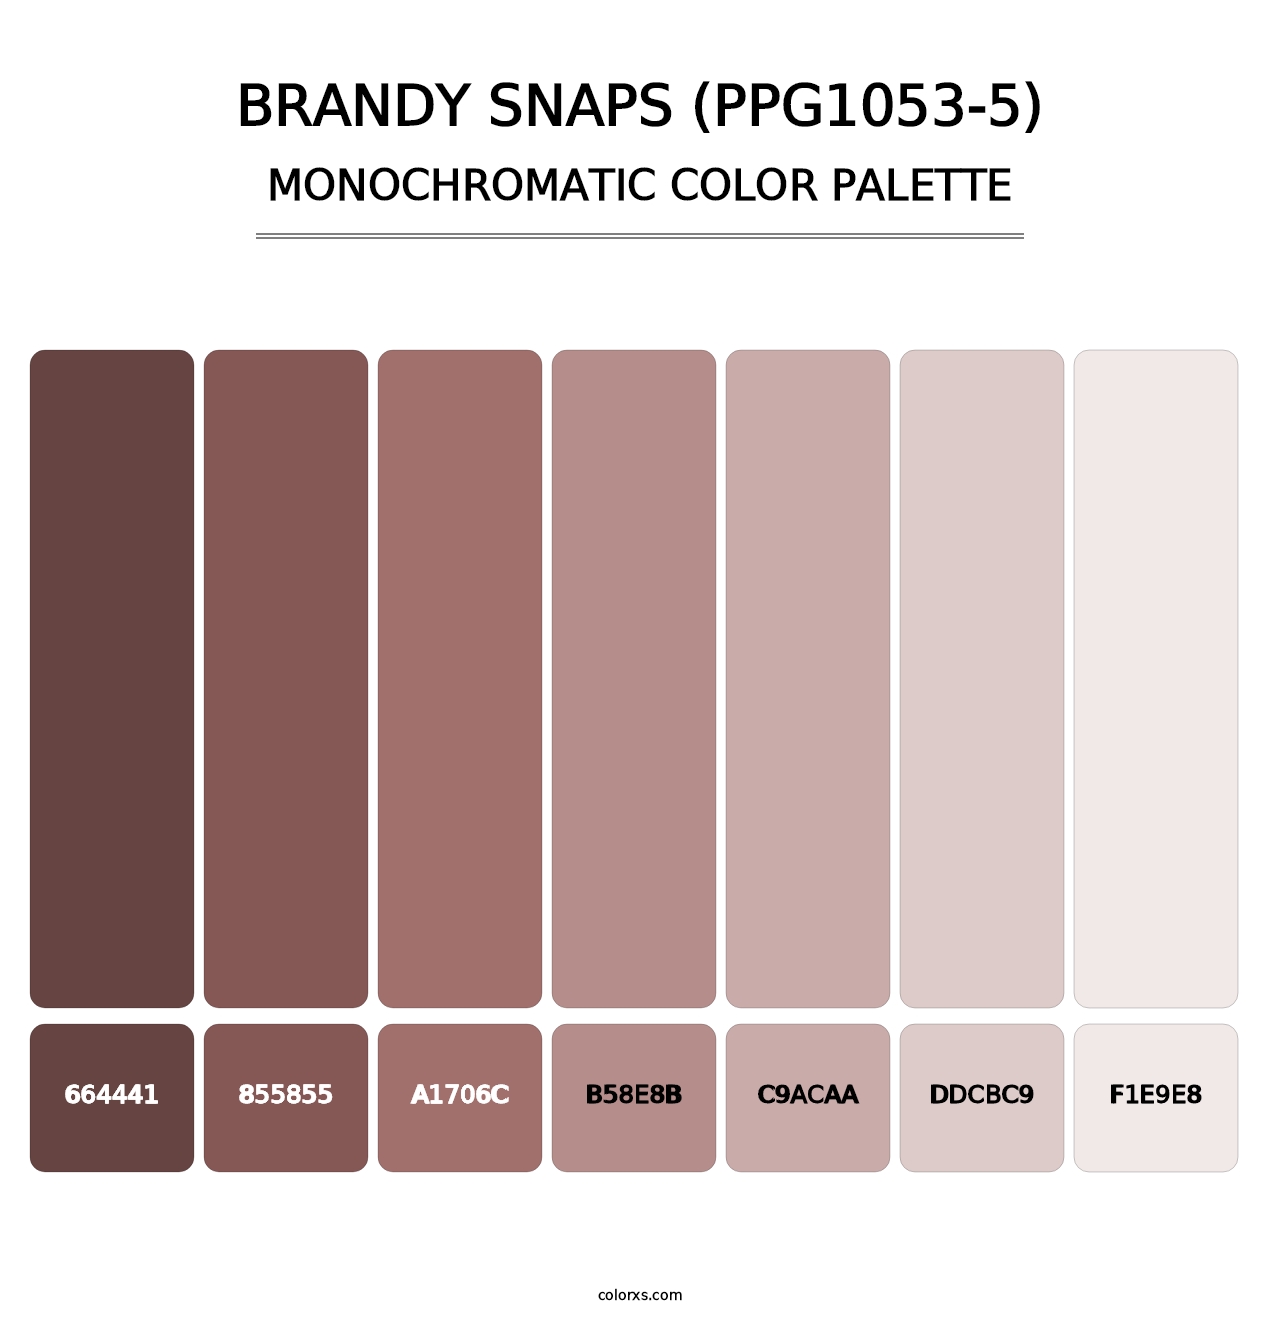 Brandy Snaps (PPG1053-5) - Monochromatic Color Palette